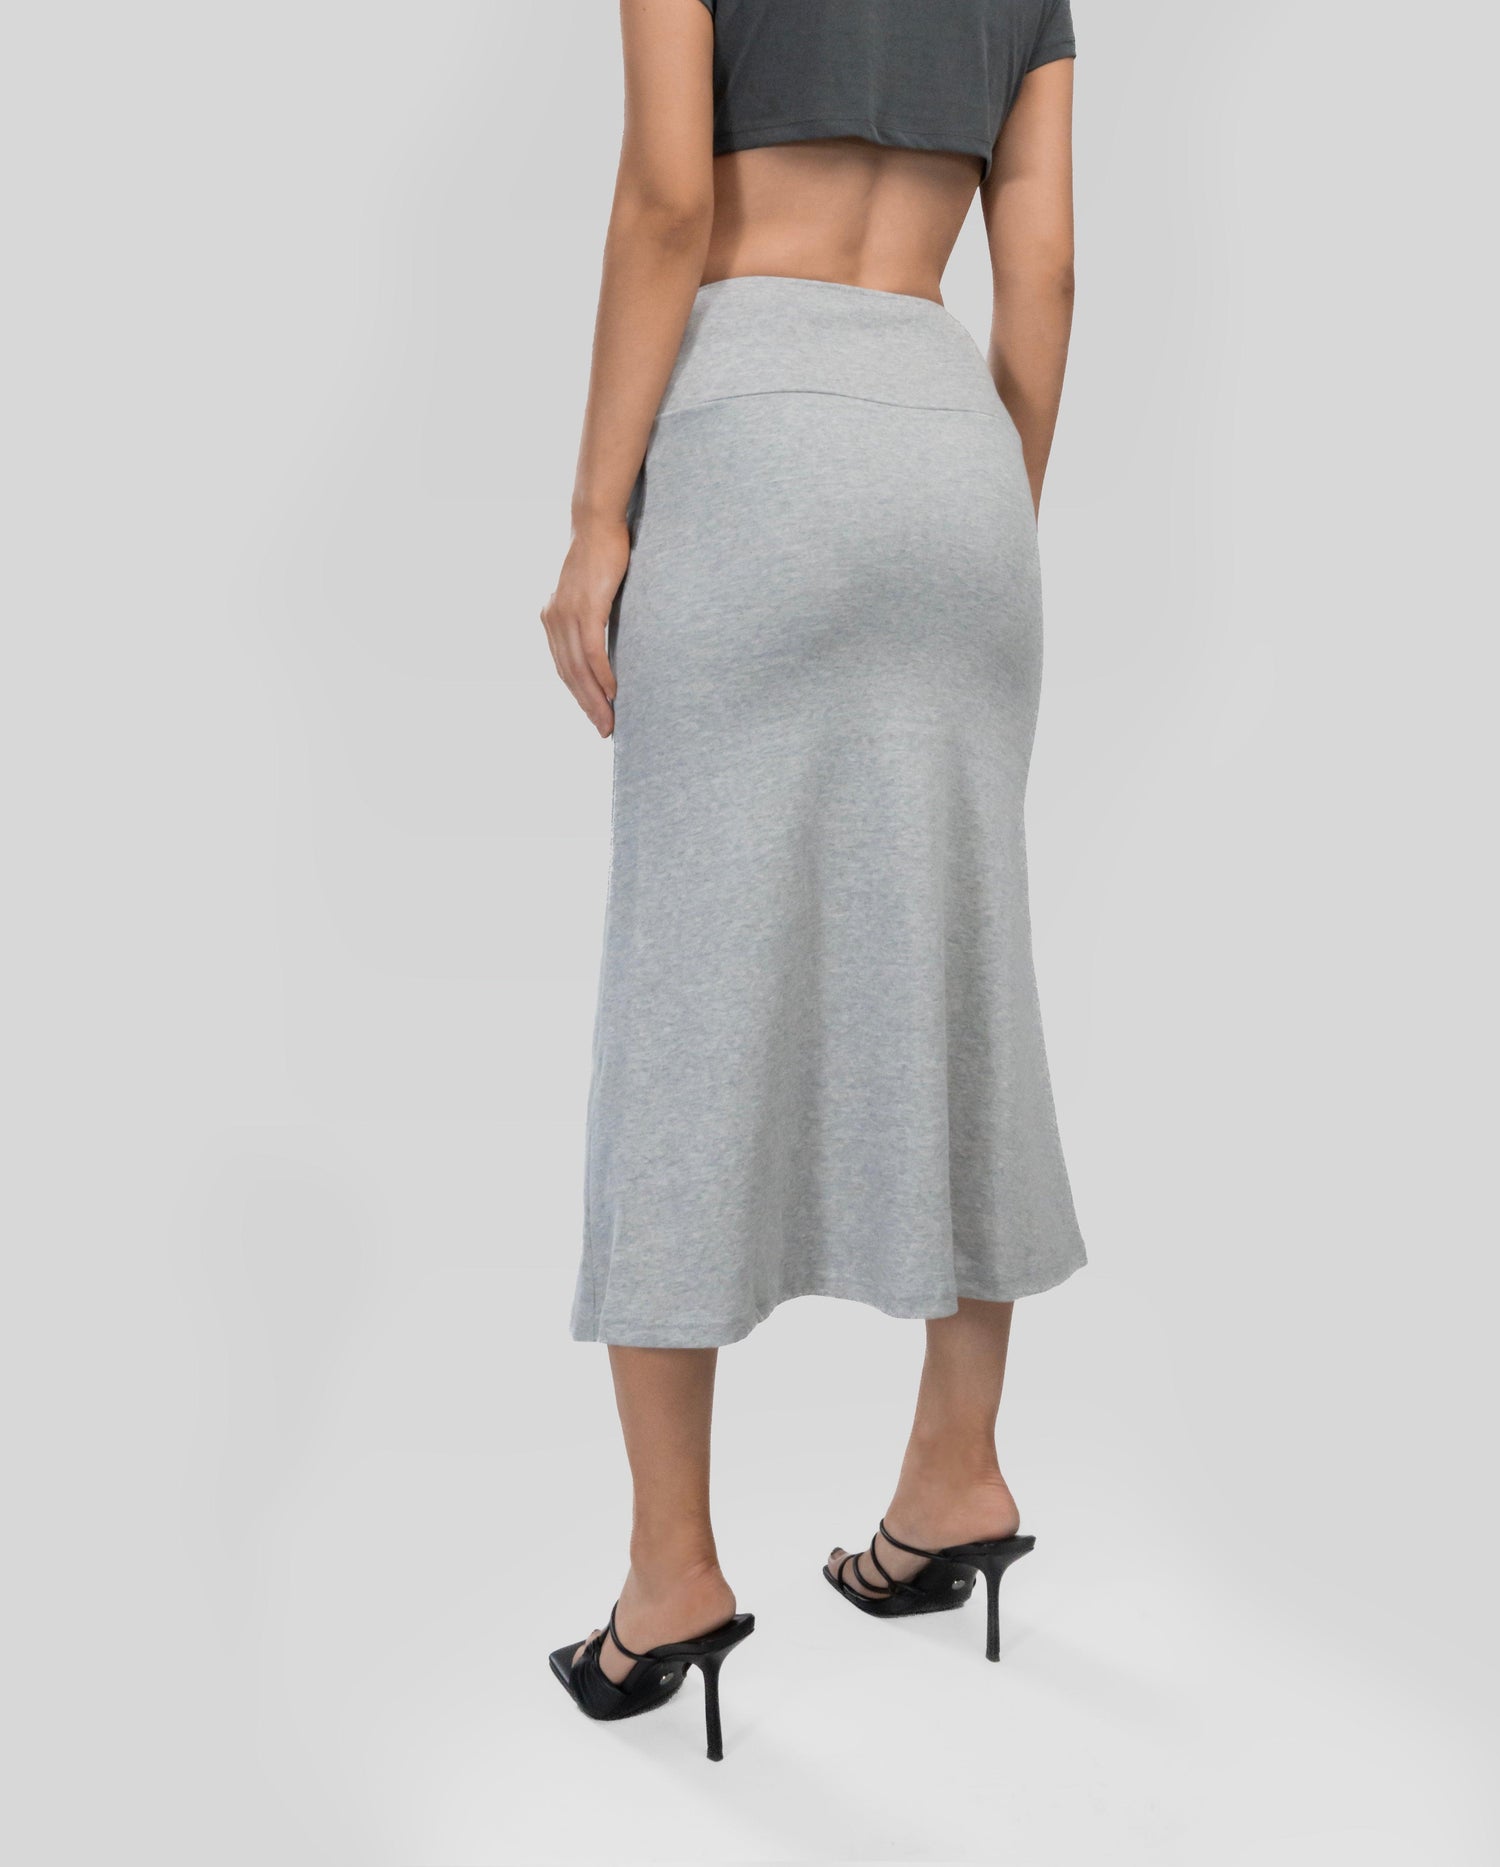 Reese Venus Graphic Flare Skirt / Grey - The Bekk